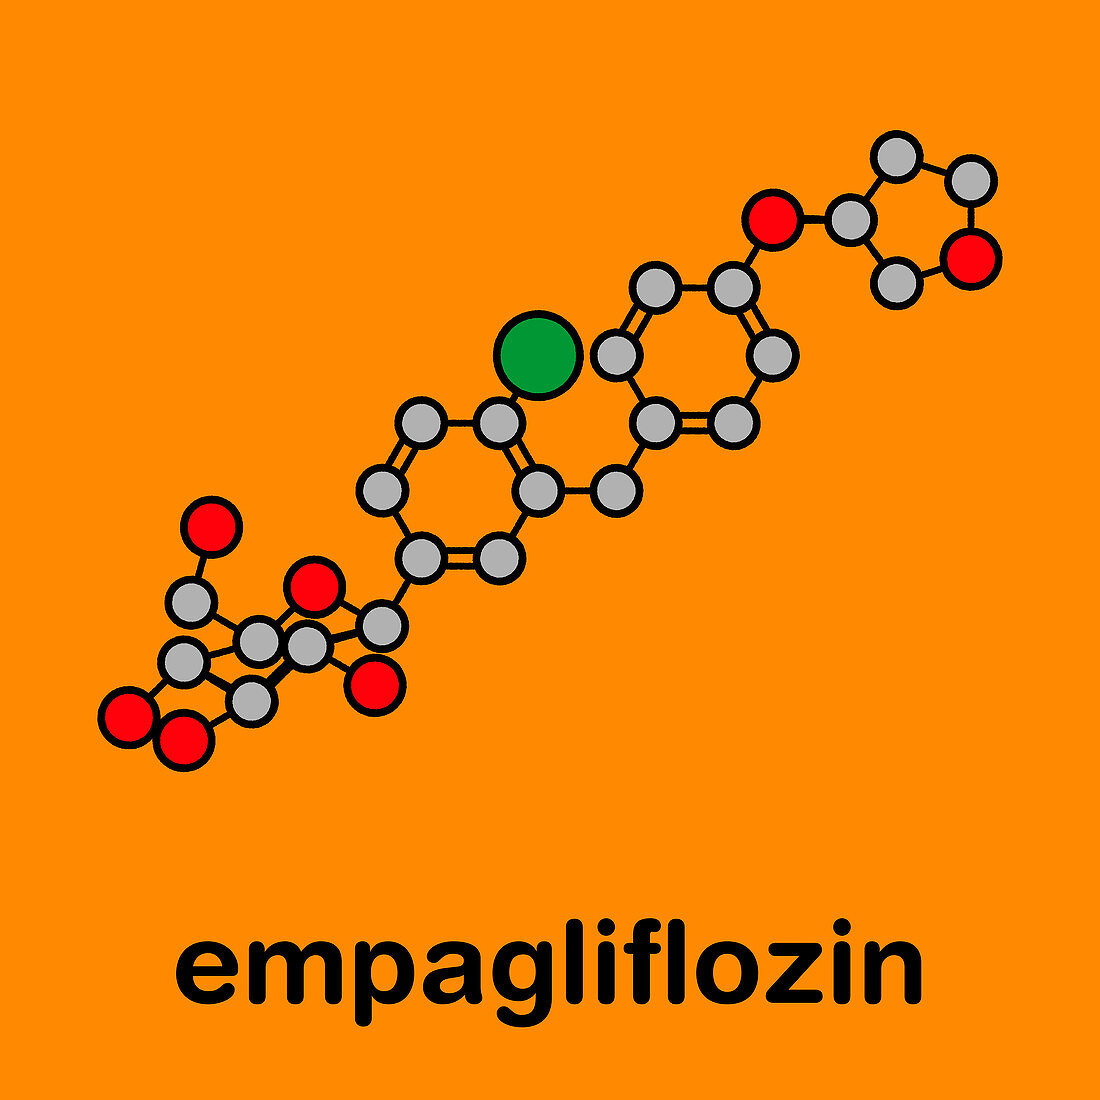 Empagliflozin diabetes drug, molecular model